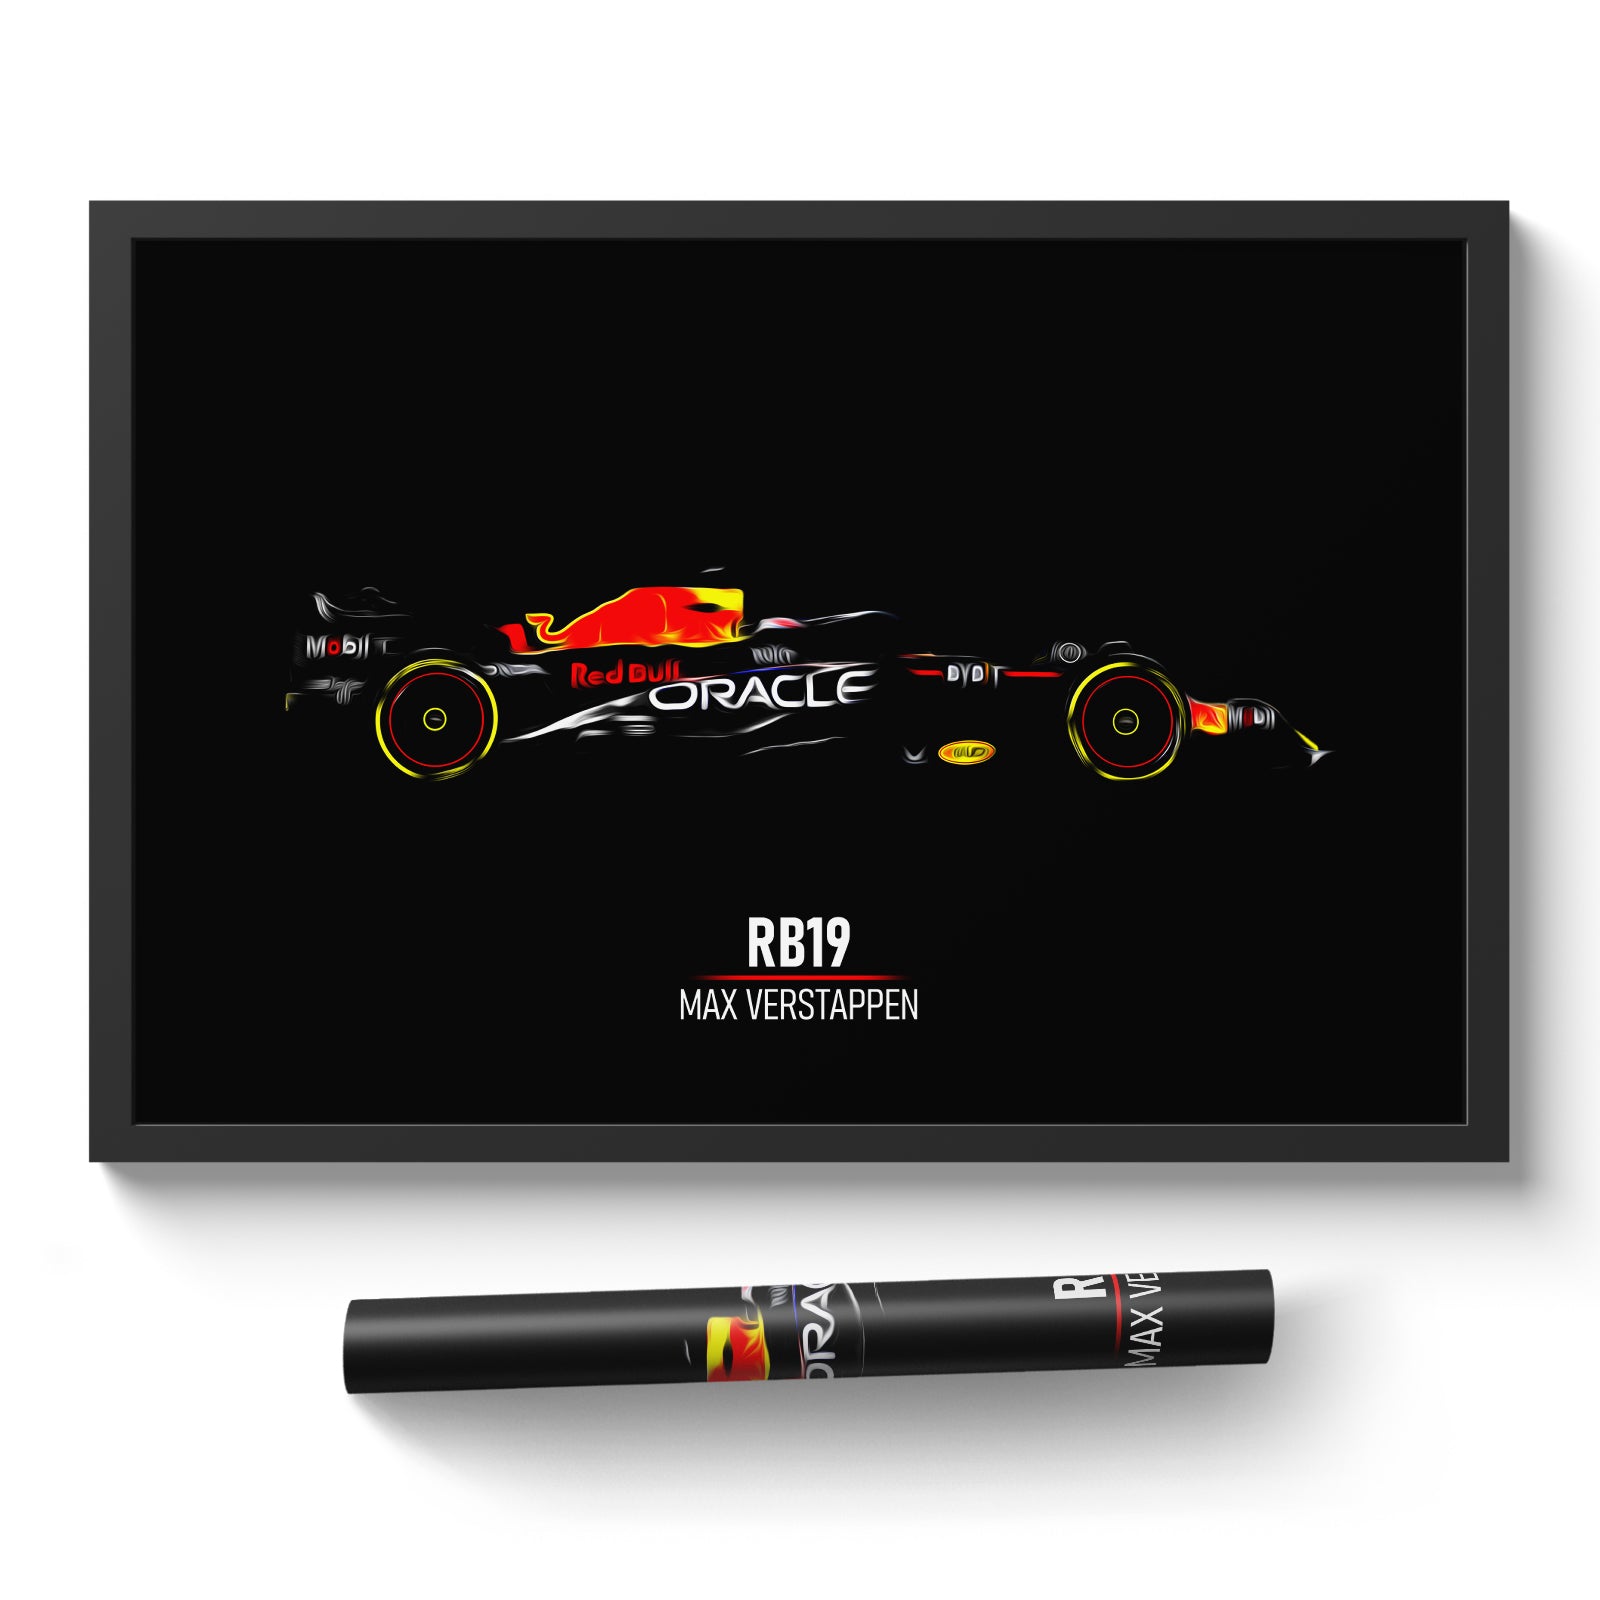 Max Verstappen (Red Bull Racing), Germany 2019 colour pop [4138x2759] :  r/F1Porn